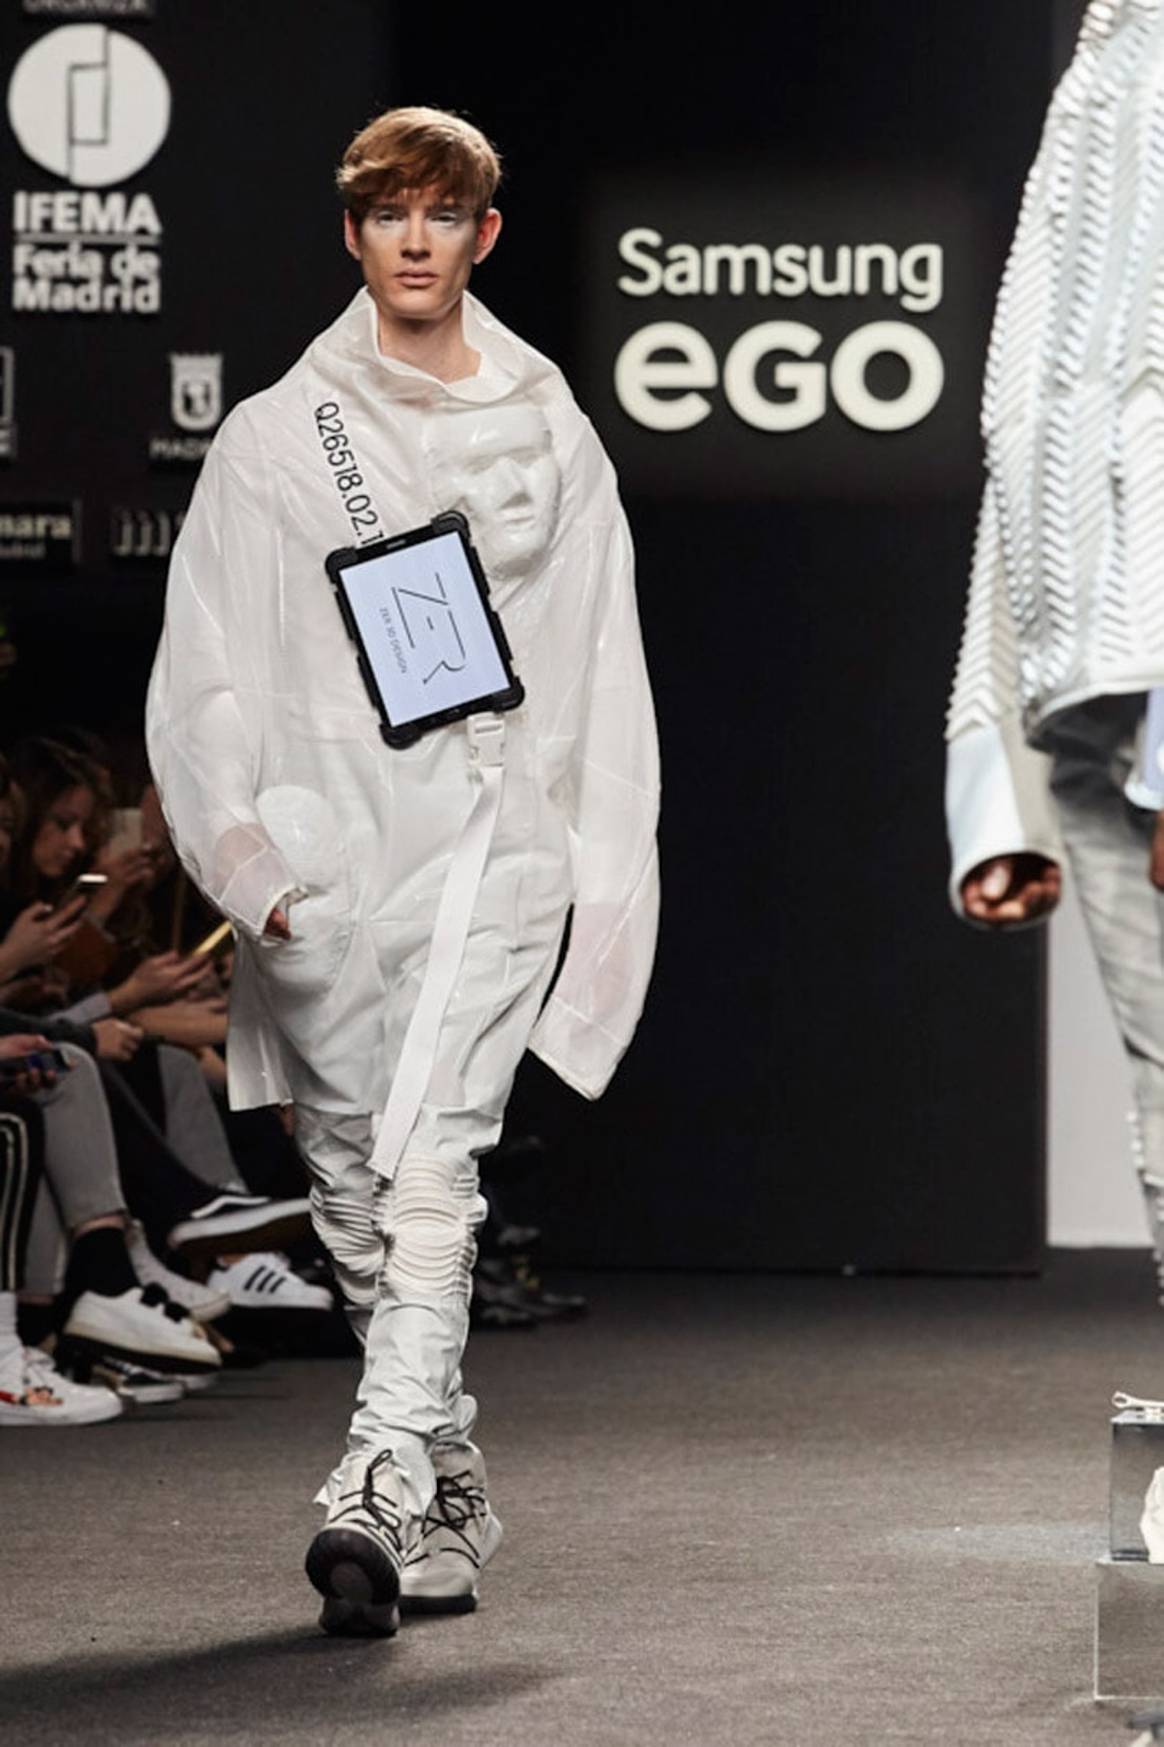 Zer firma ganadora del Samsung Ego Innovation Project